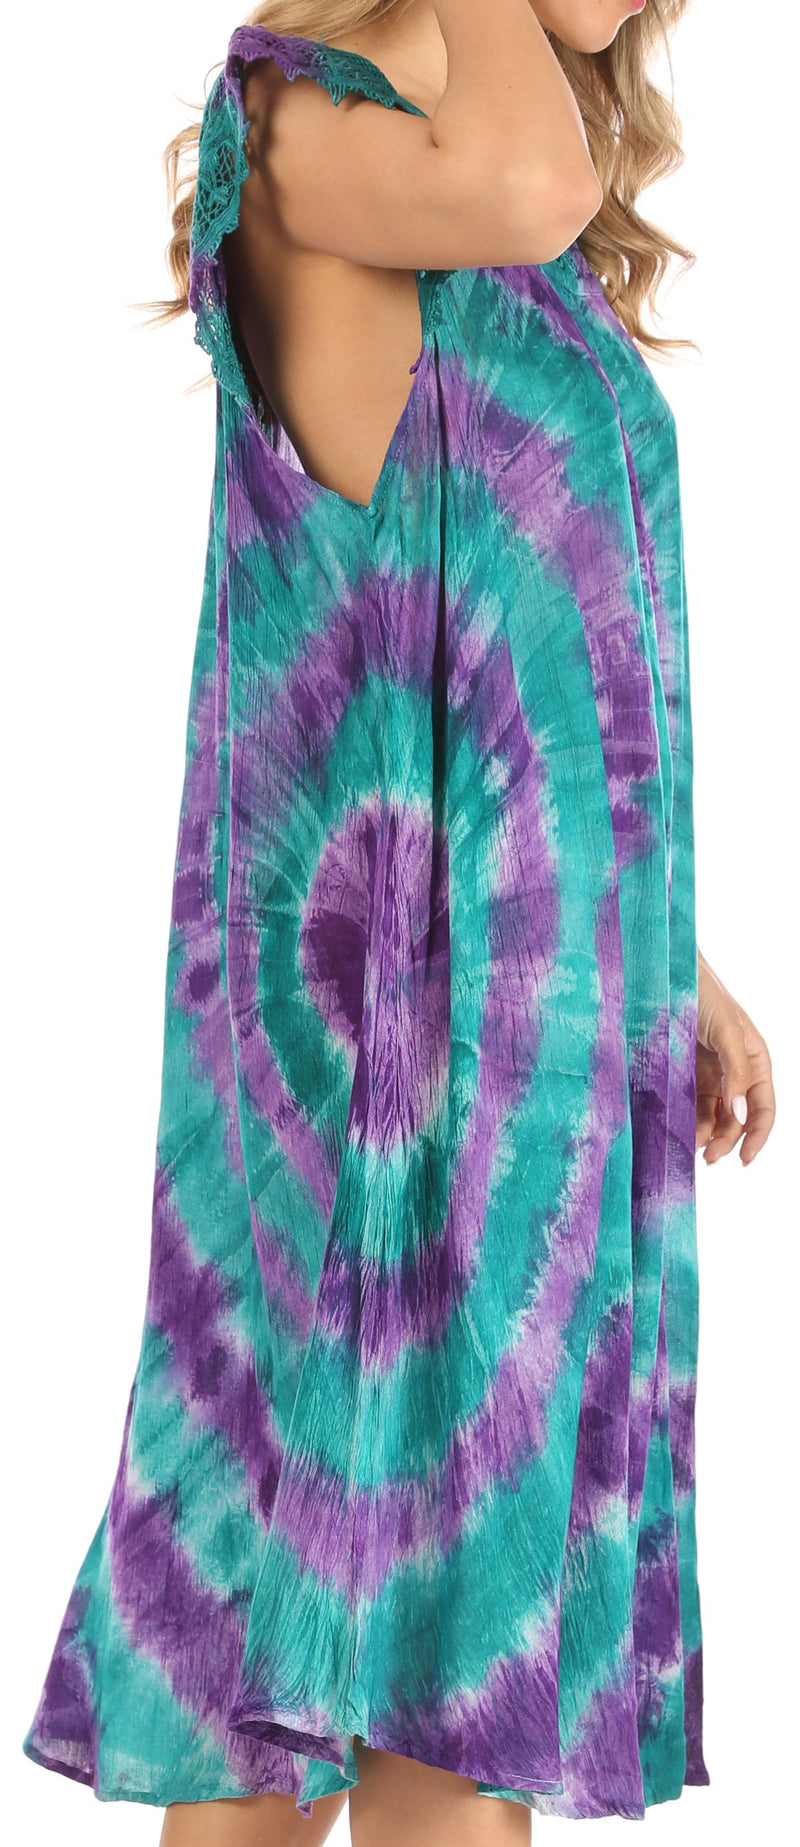 Sakkas Trila Women's Casual Summer Lace Boho Short Sleeve Midi Loose Dress Flowy